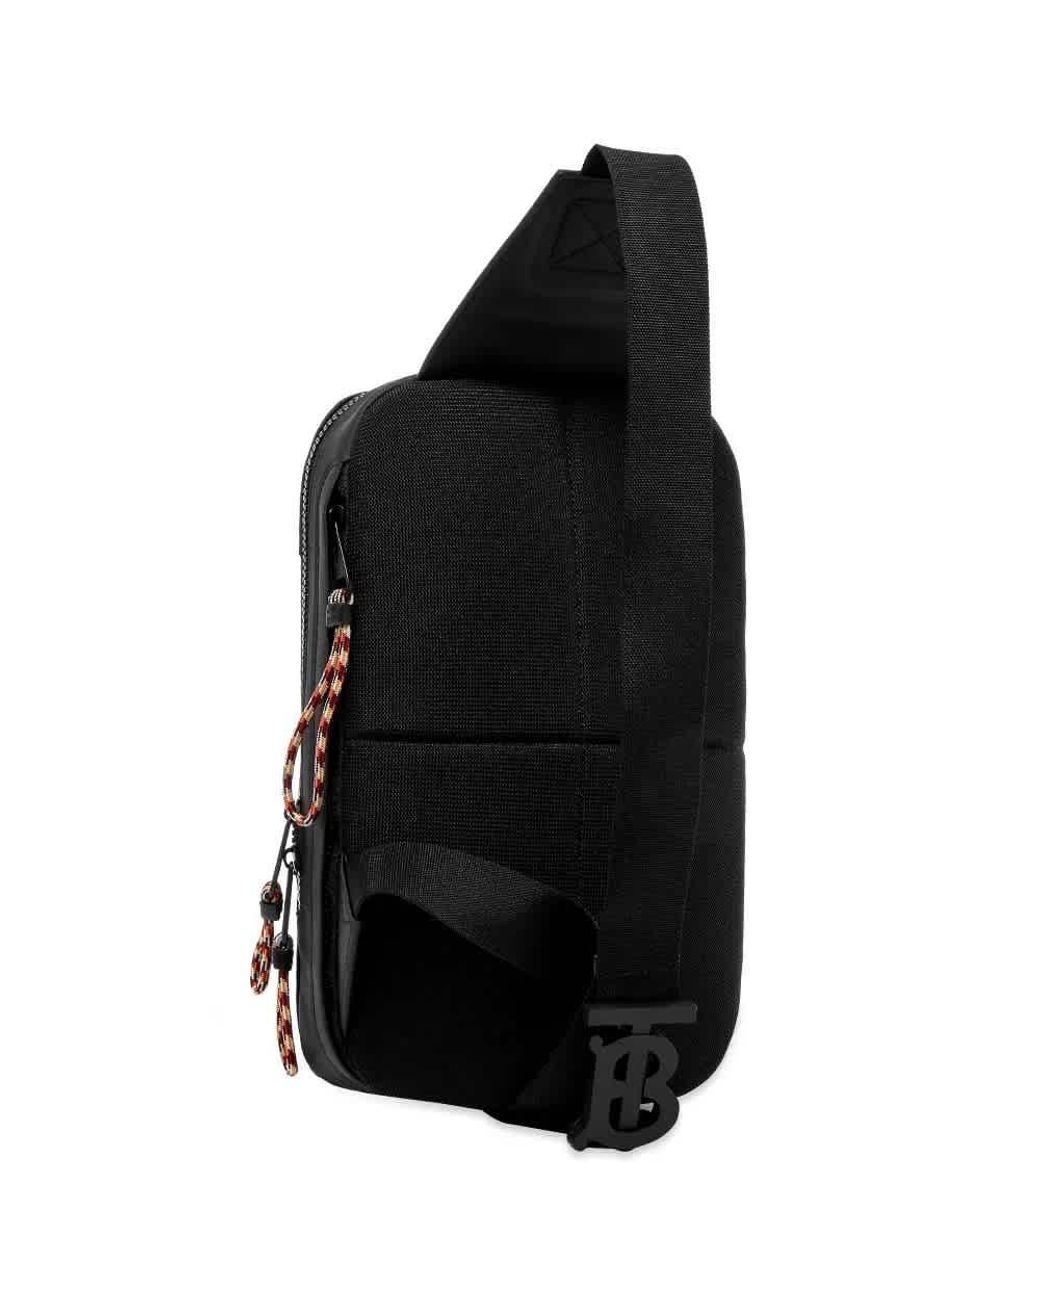 Buy The Sling Bag Online in India Mokobara